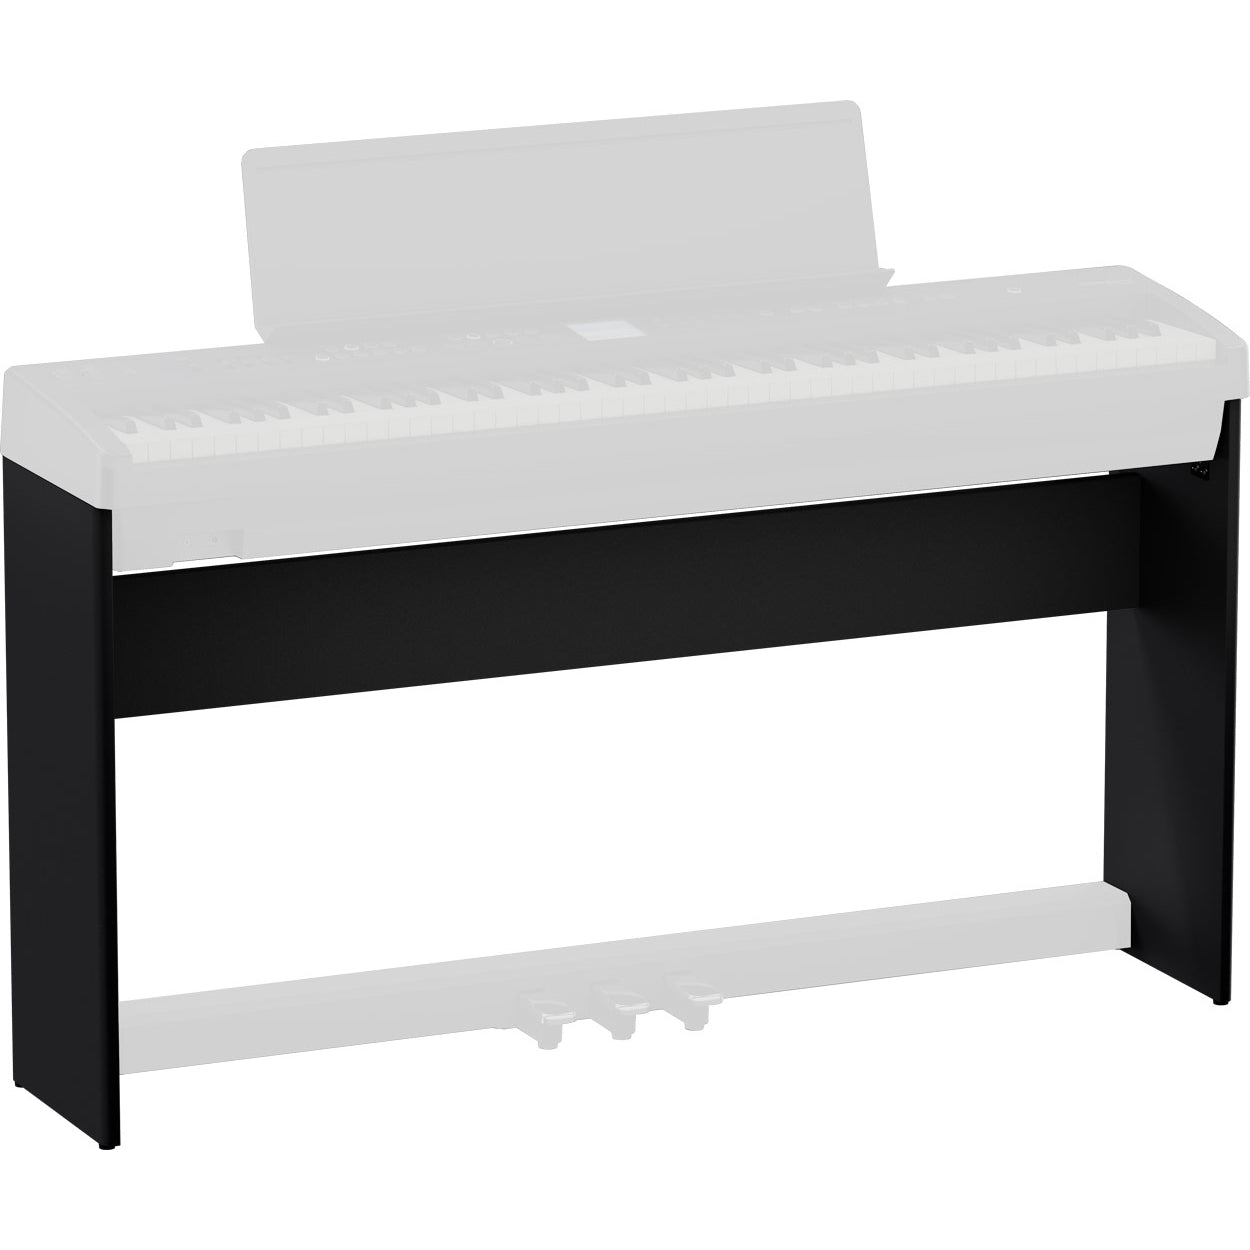 Roland KSFE50-BK Digital Piano Stand Black